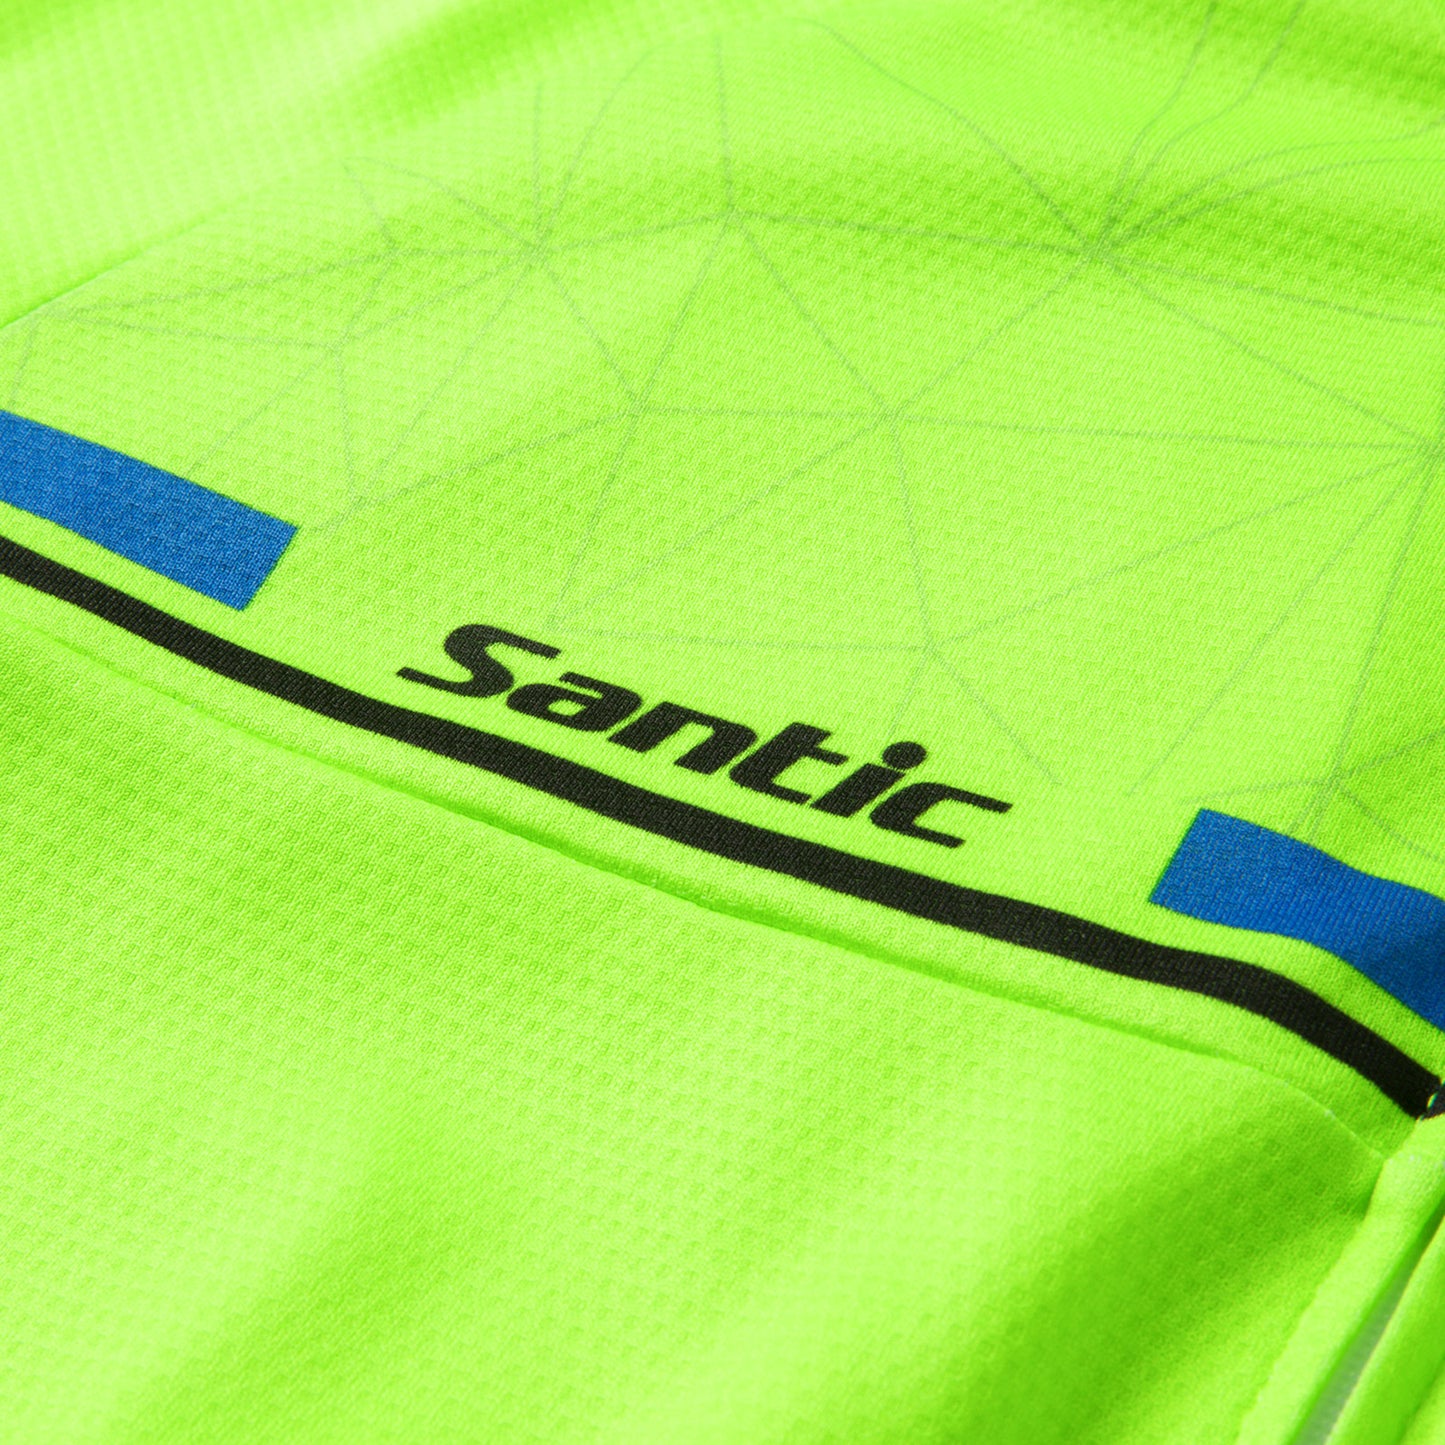 Santic Kamen Lightgreen Men Cycling Jersey Short Sleeve